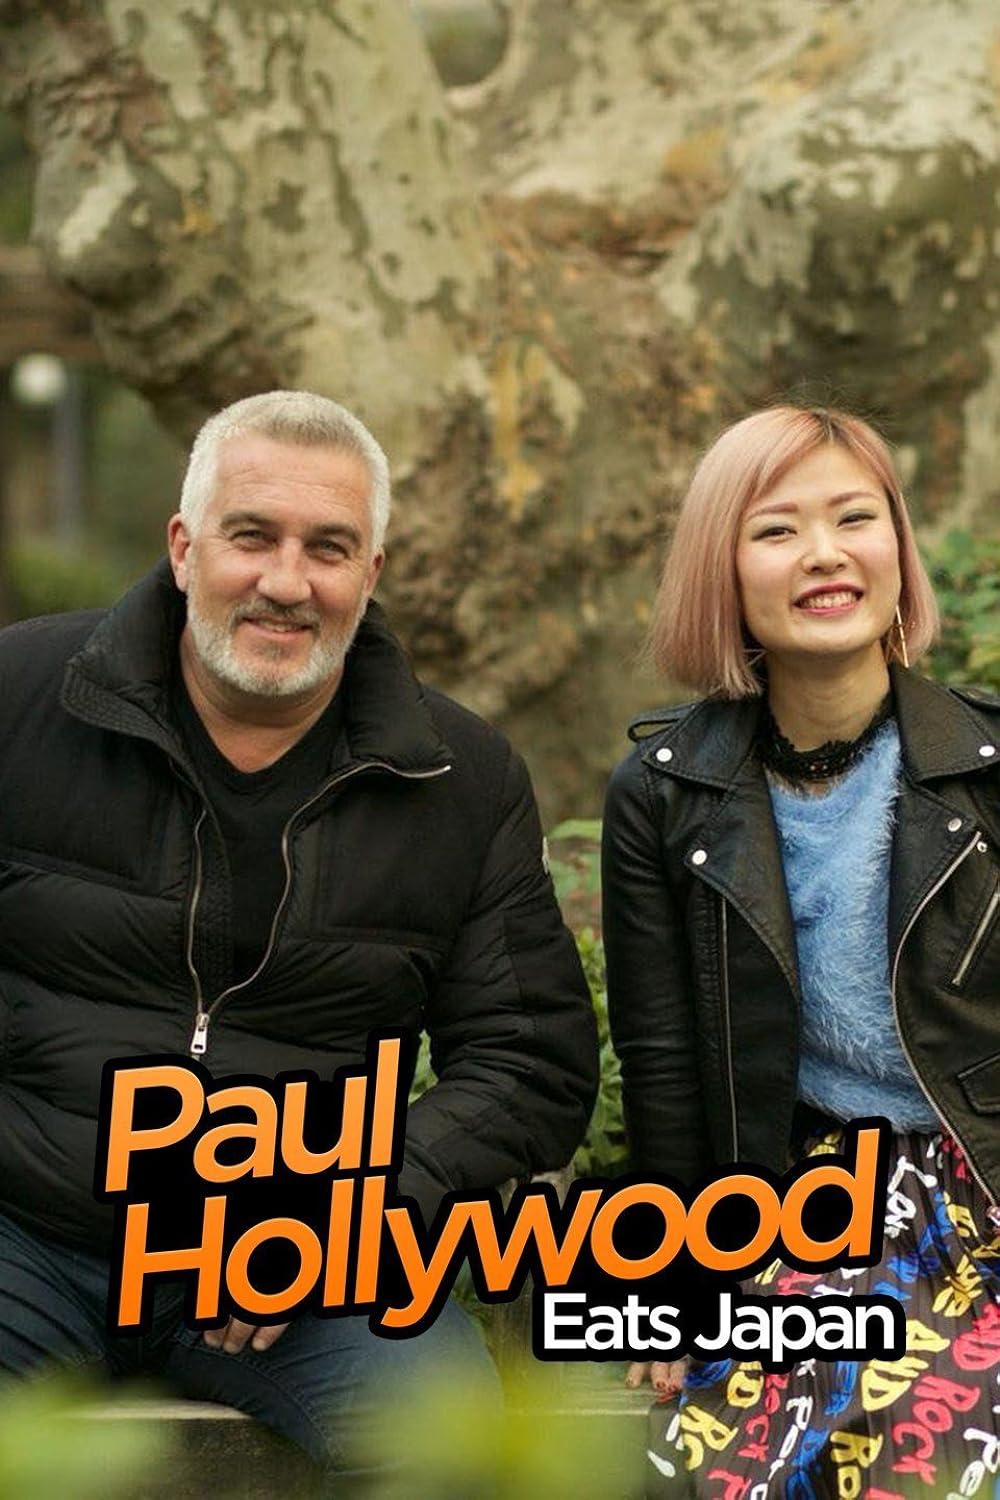 Paul Hollywood Eats Japan